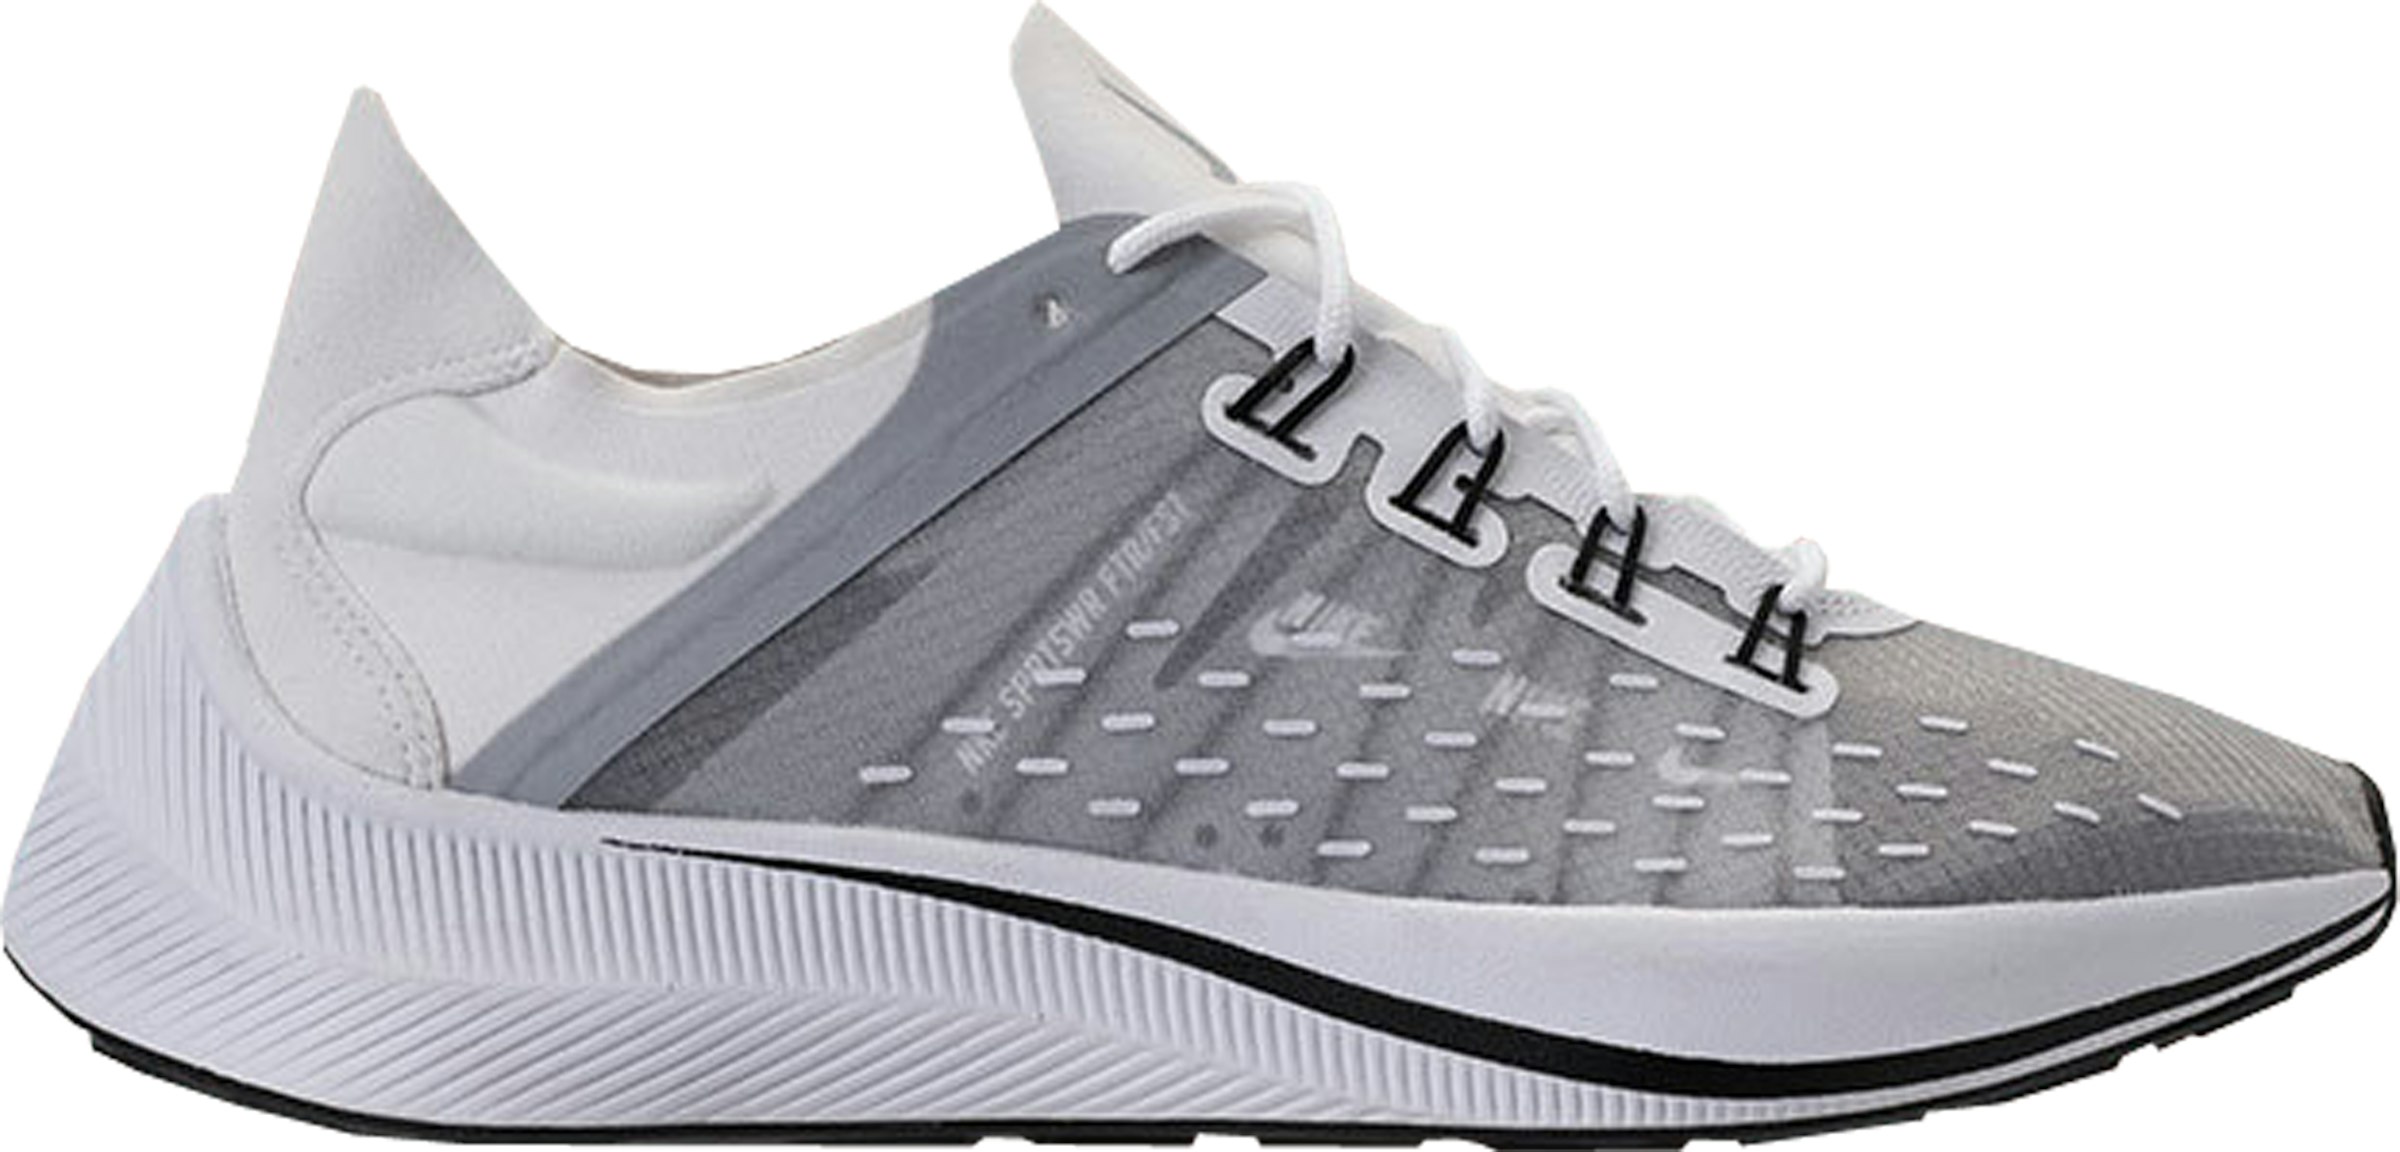 Nike EXP-X14 Wolf Grey (Women's) - US